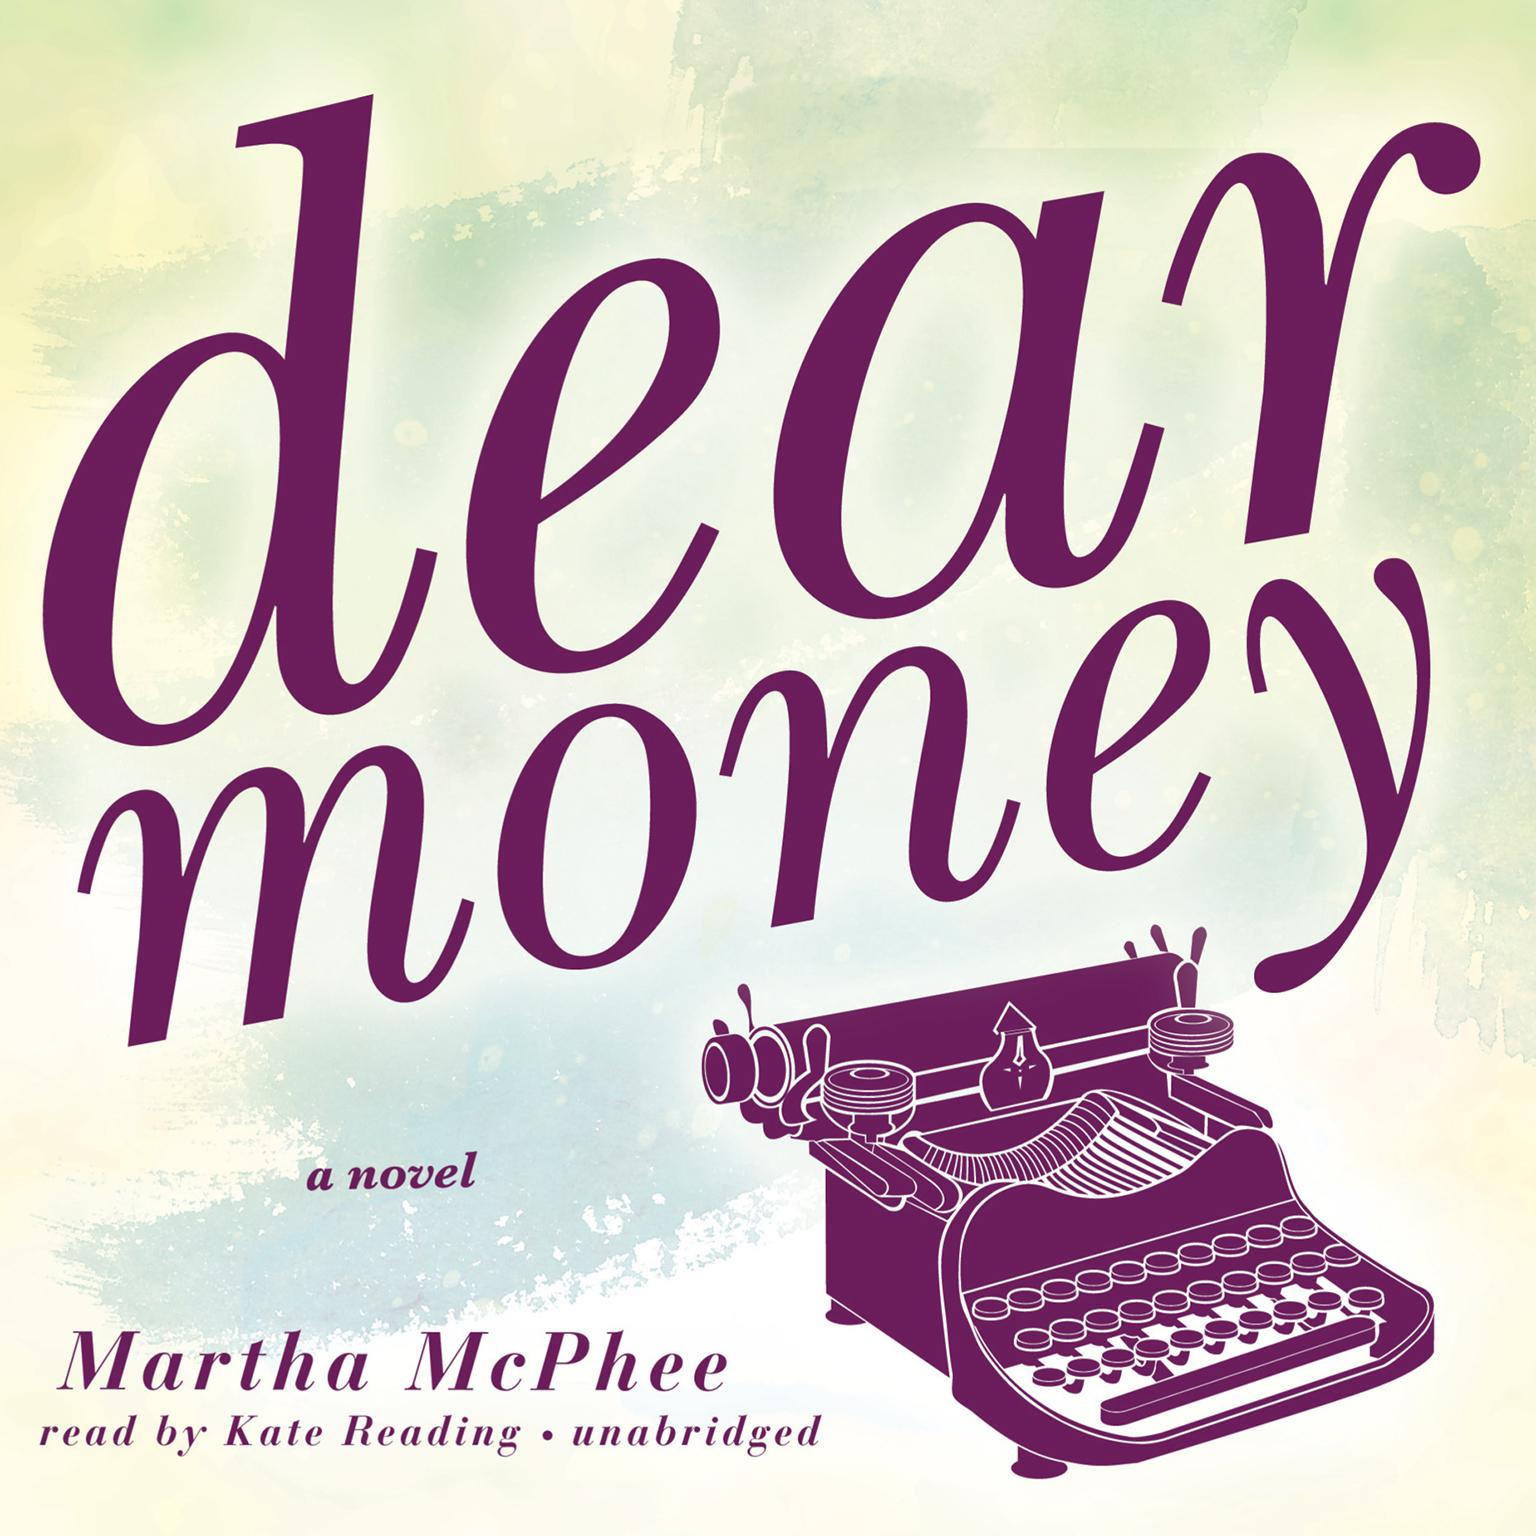 Dear Money Audiobook, by Martha McPhee